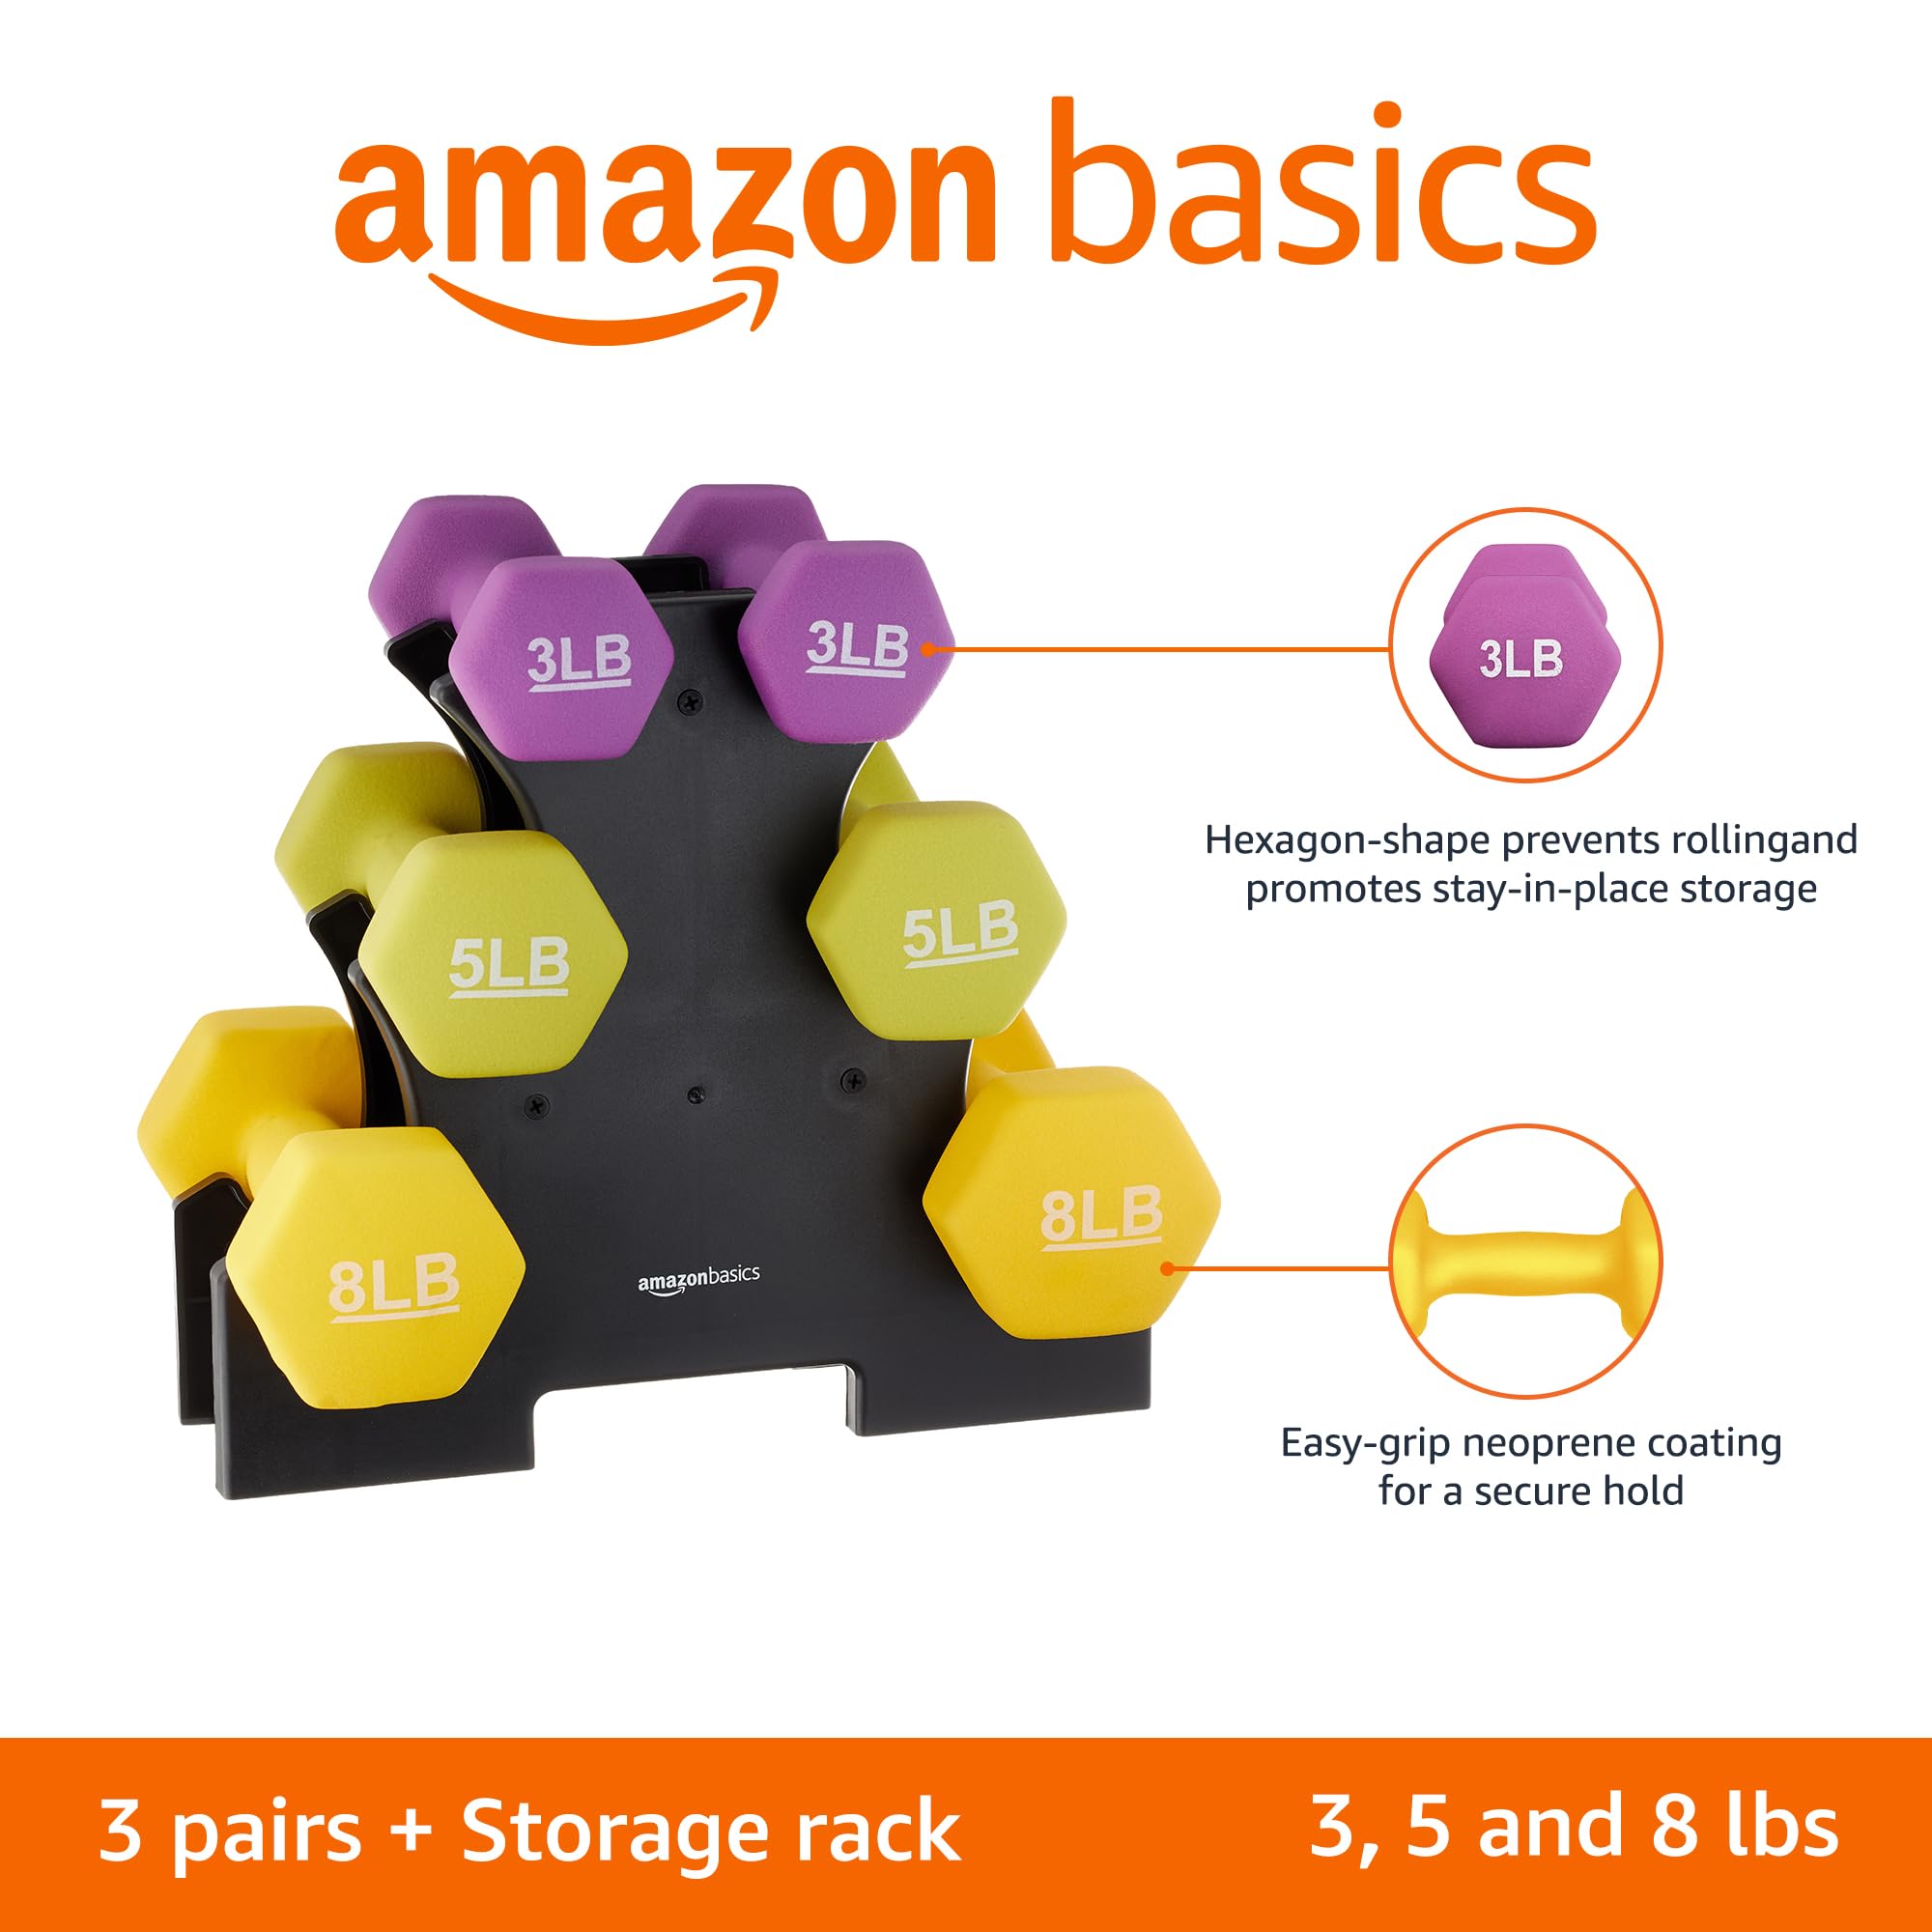 Amazon Basics Neoprene Workout Dumbbell